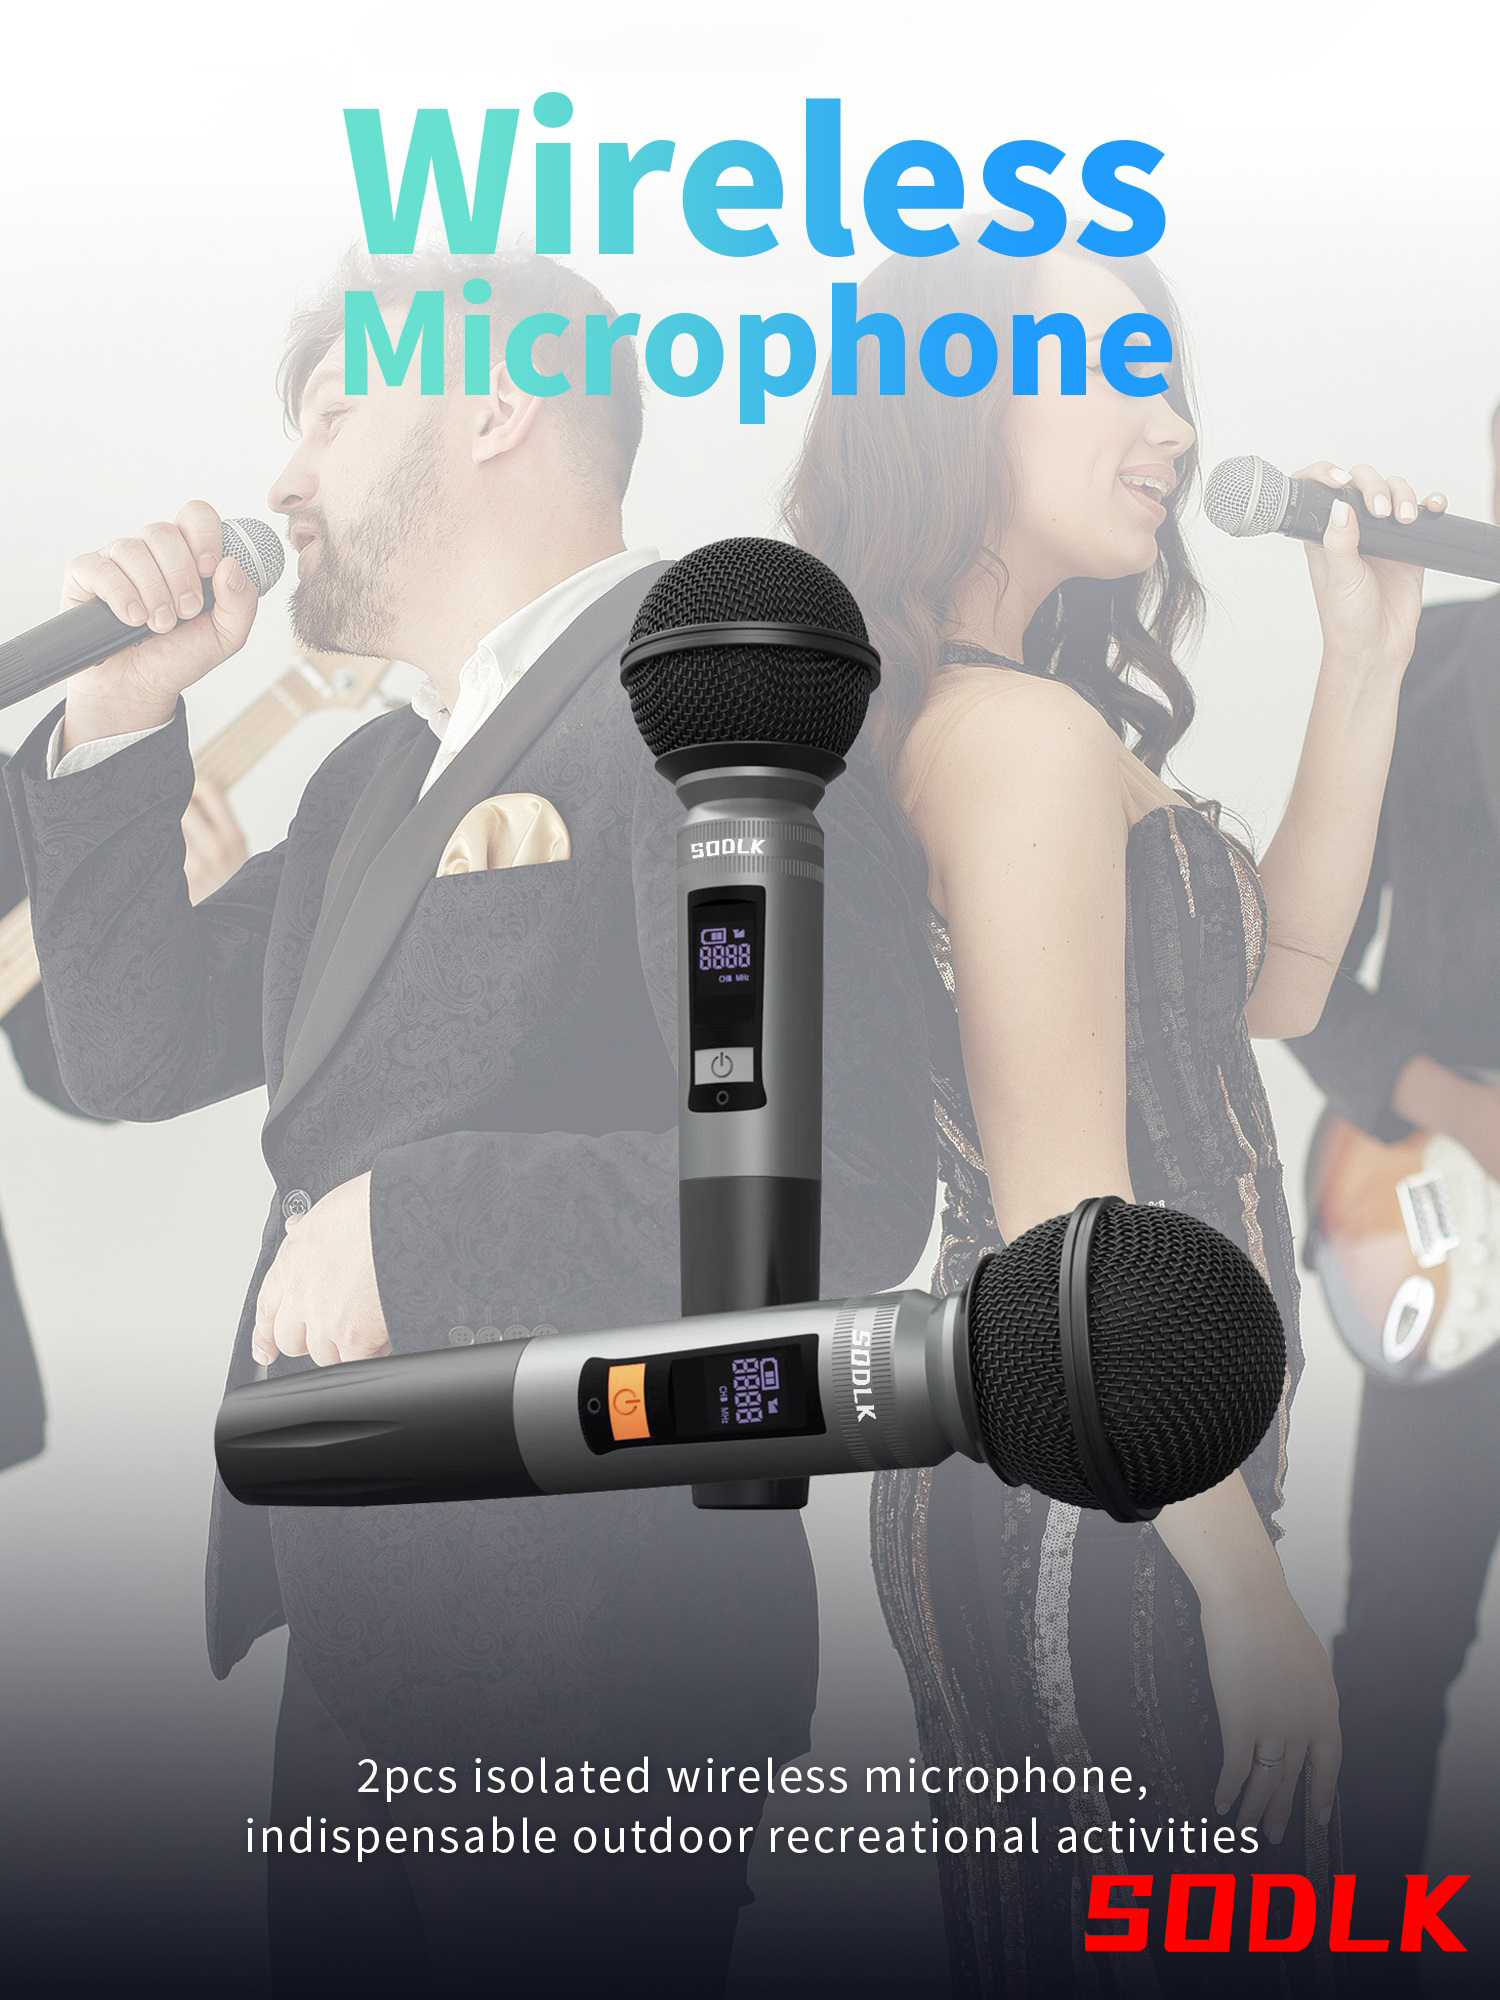 Loa SODLK T18 bluetooth 5.0  Micro karaoke, đèn RGB, 80W